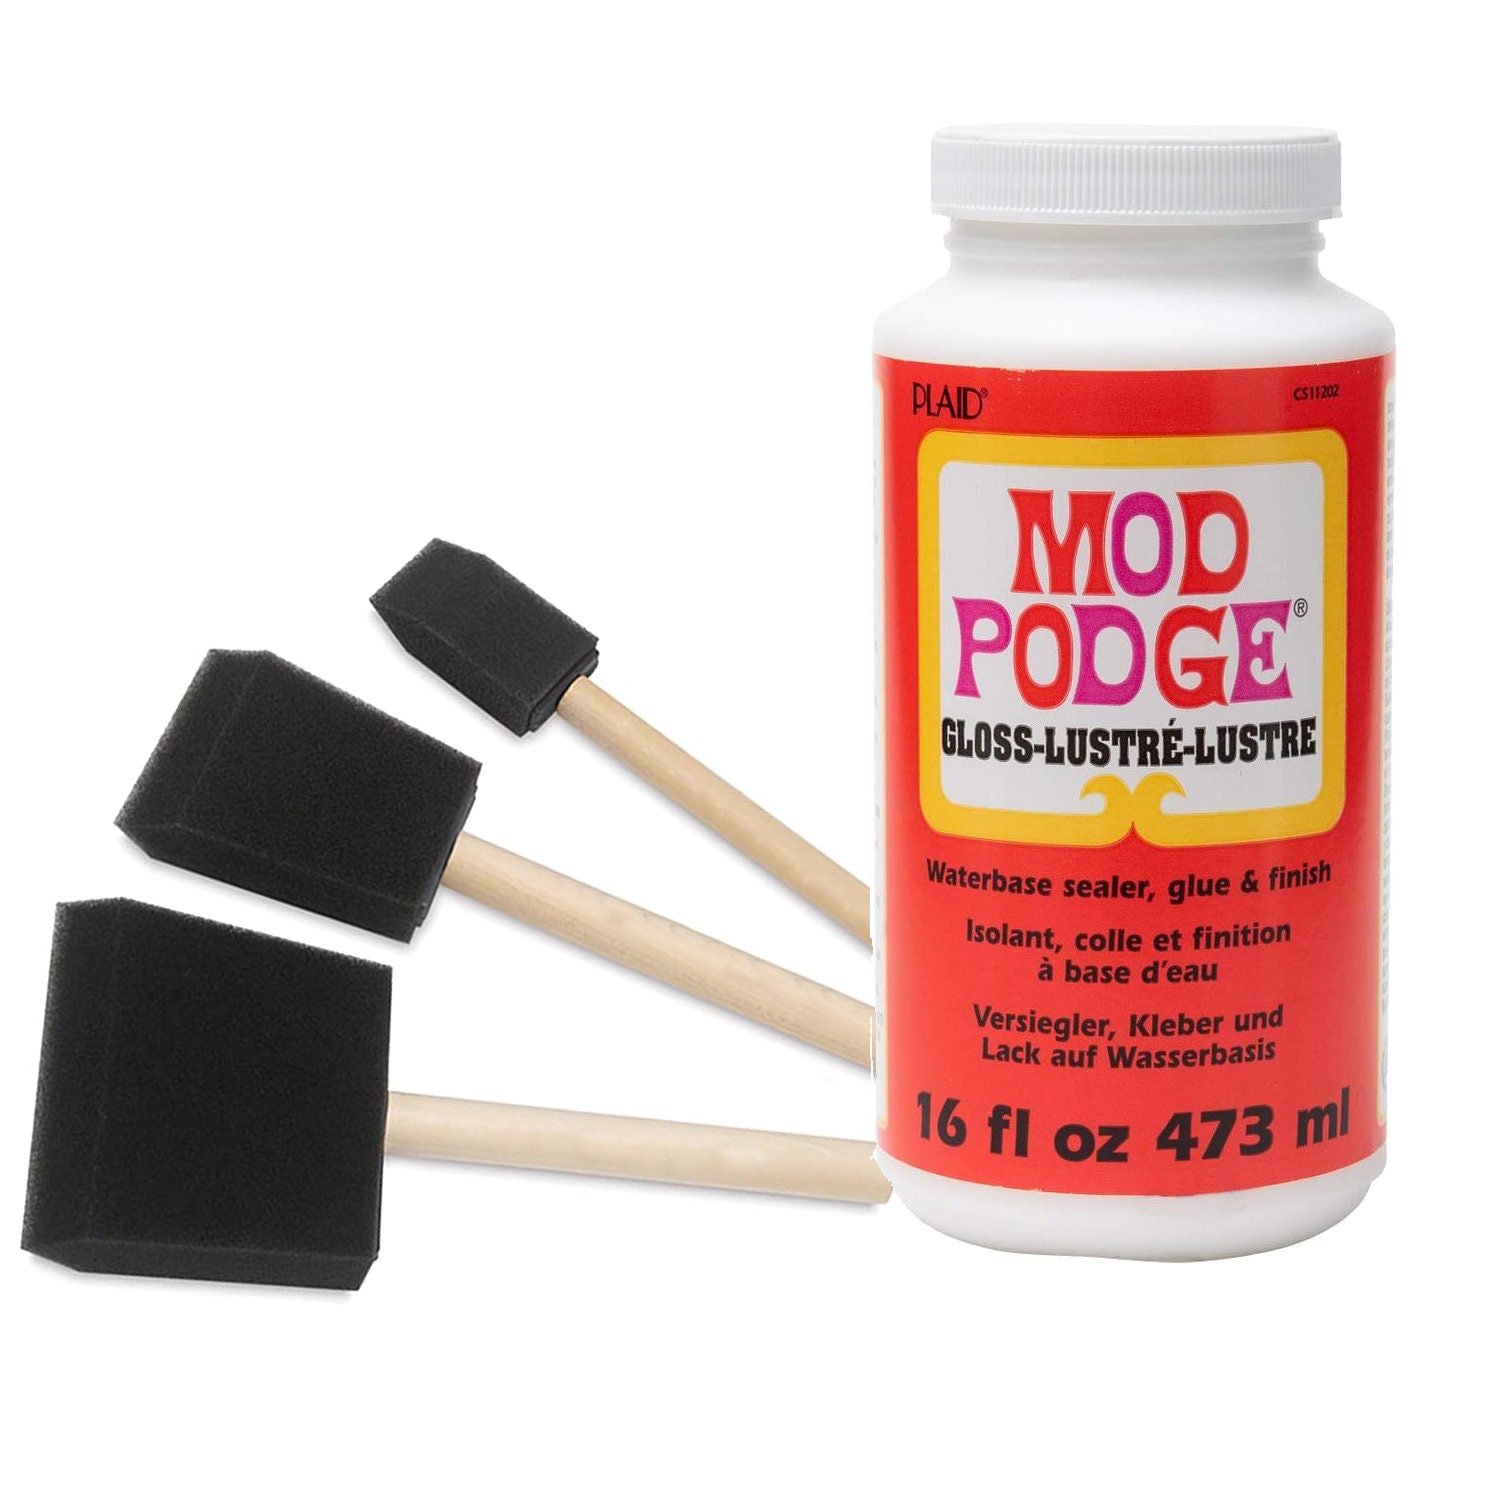 Plaid Mod Podge Medium Formulas Gloss, 16 oz., 2/Pack (2PK-CS11202